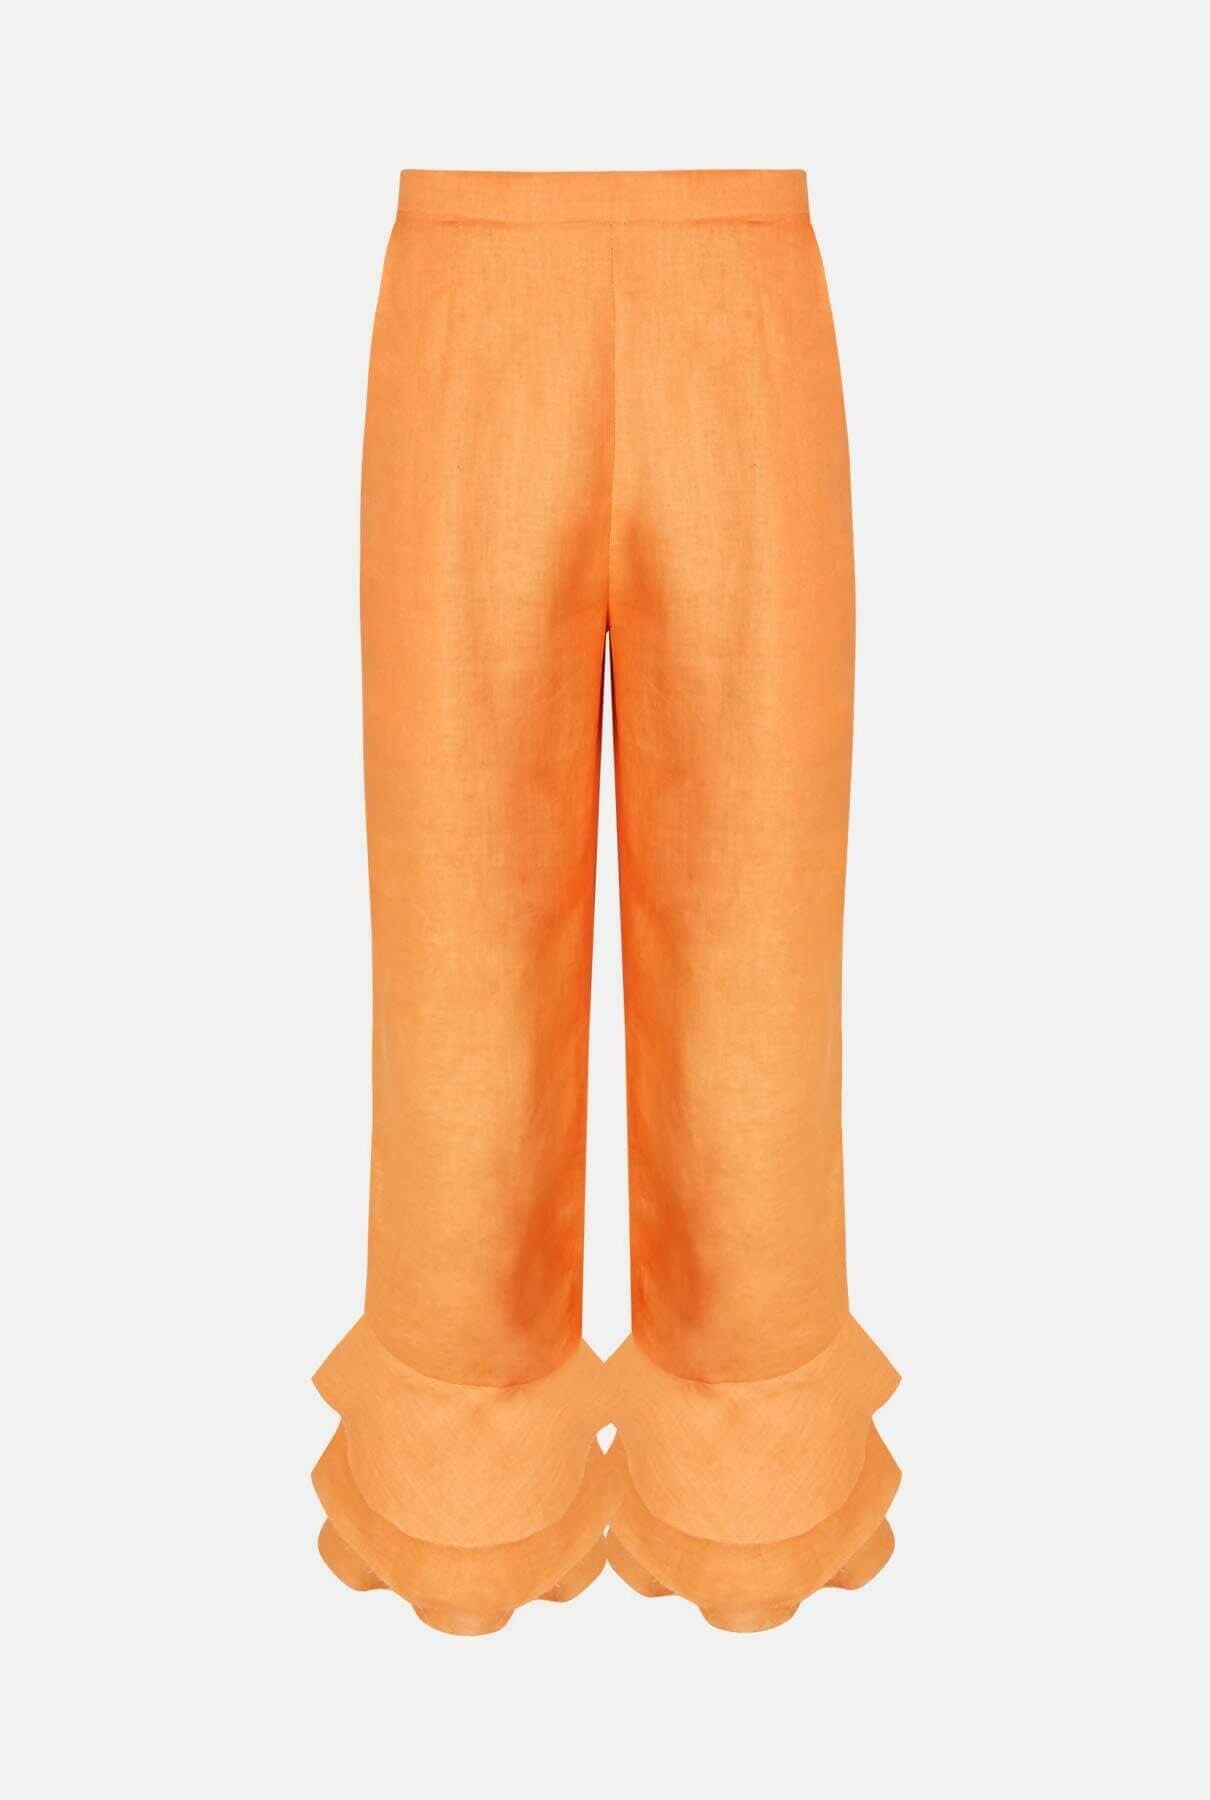 Comillas Trousers - Naranja Trousers Diddo Madrid 